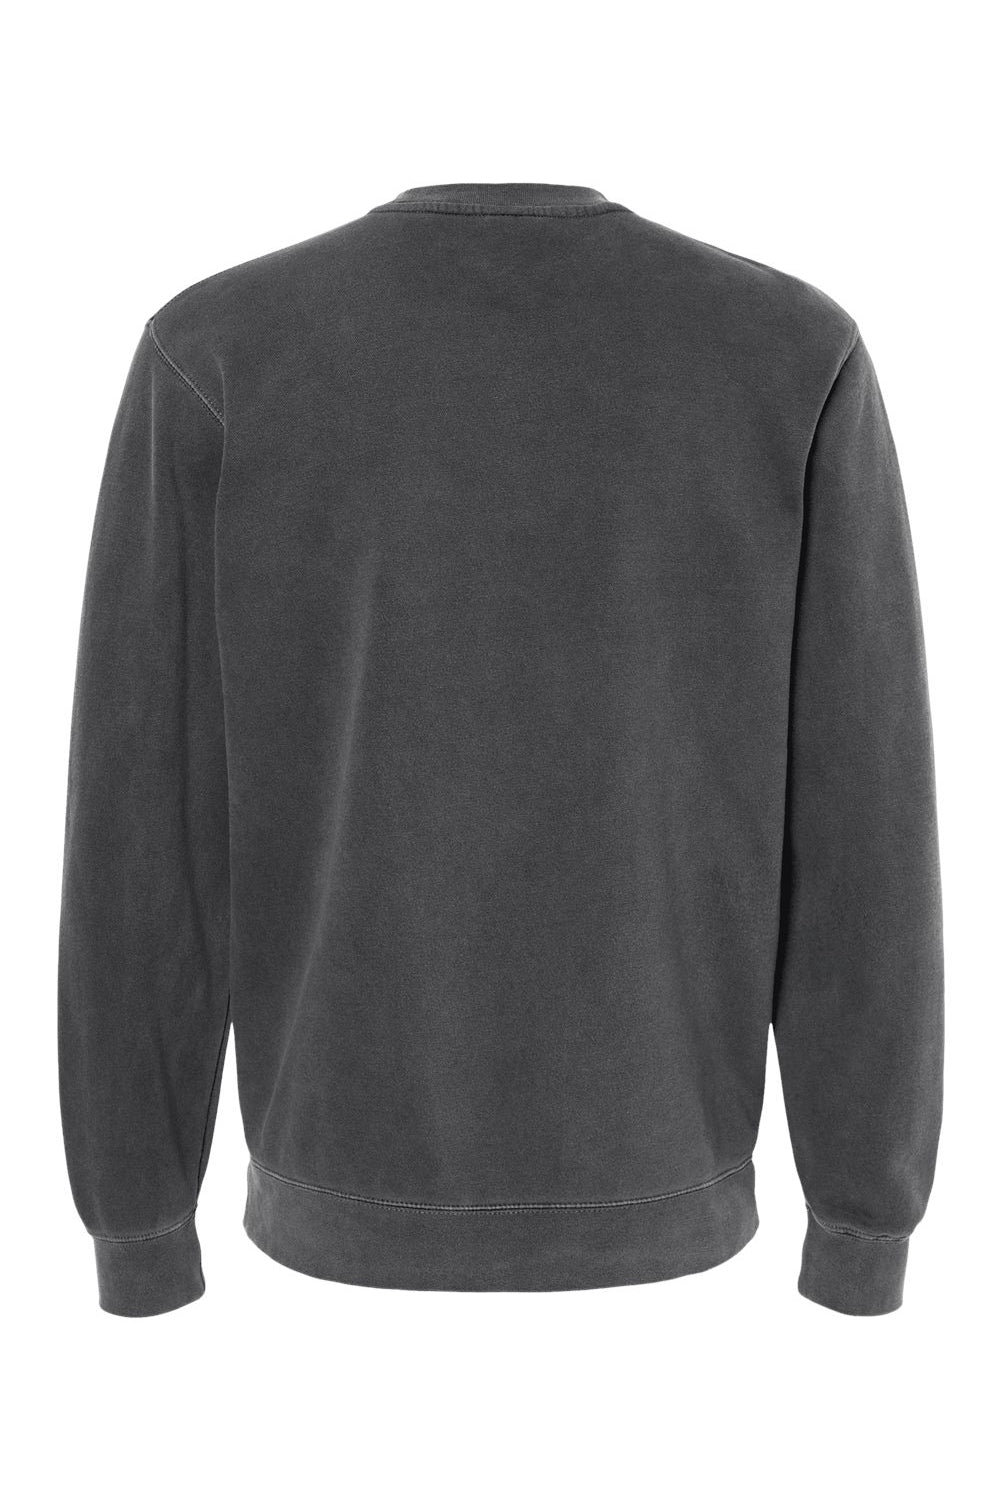 Independent Trading Co. PRM3500 Mens Pigment Dyed Crewneck Sweatshirt Black Flat Back